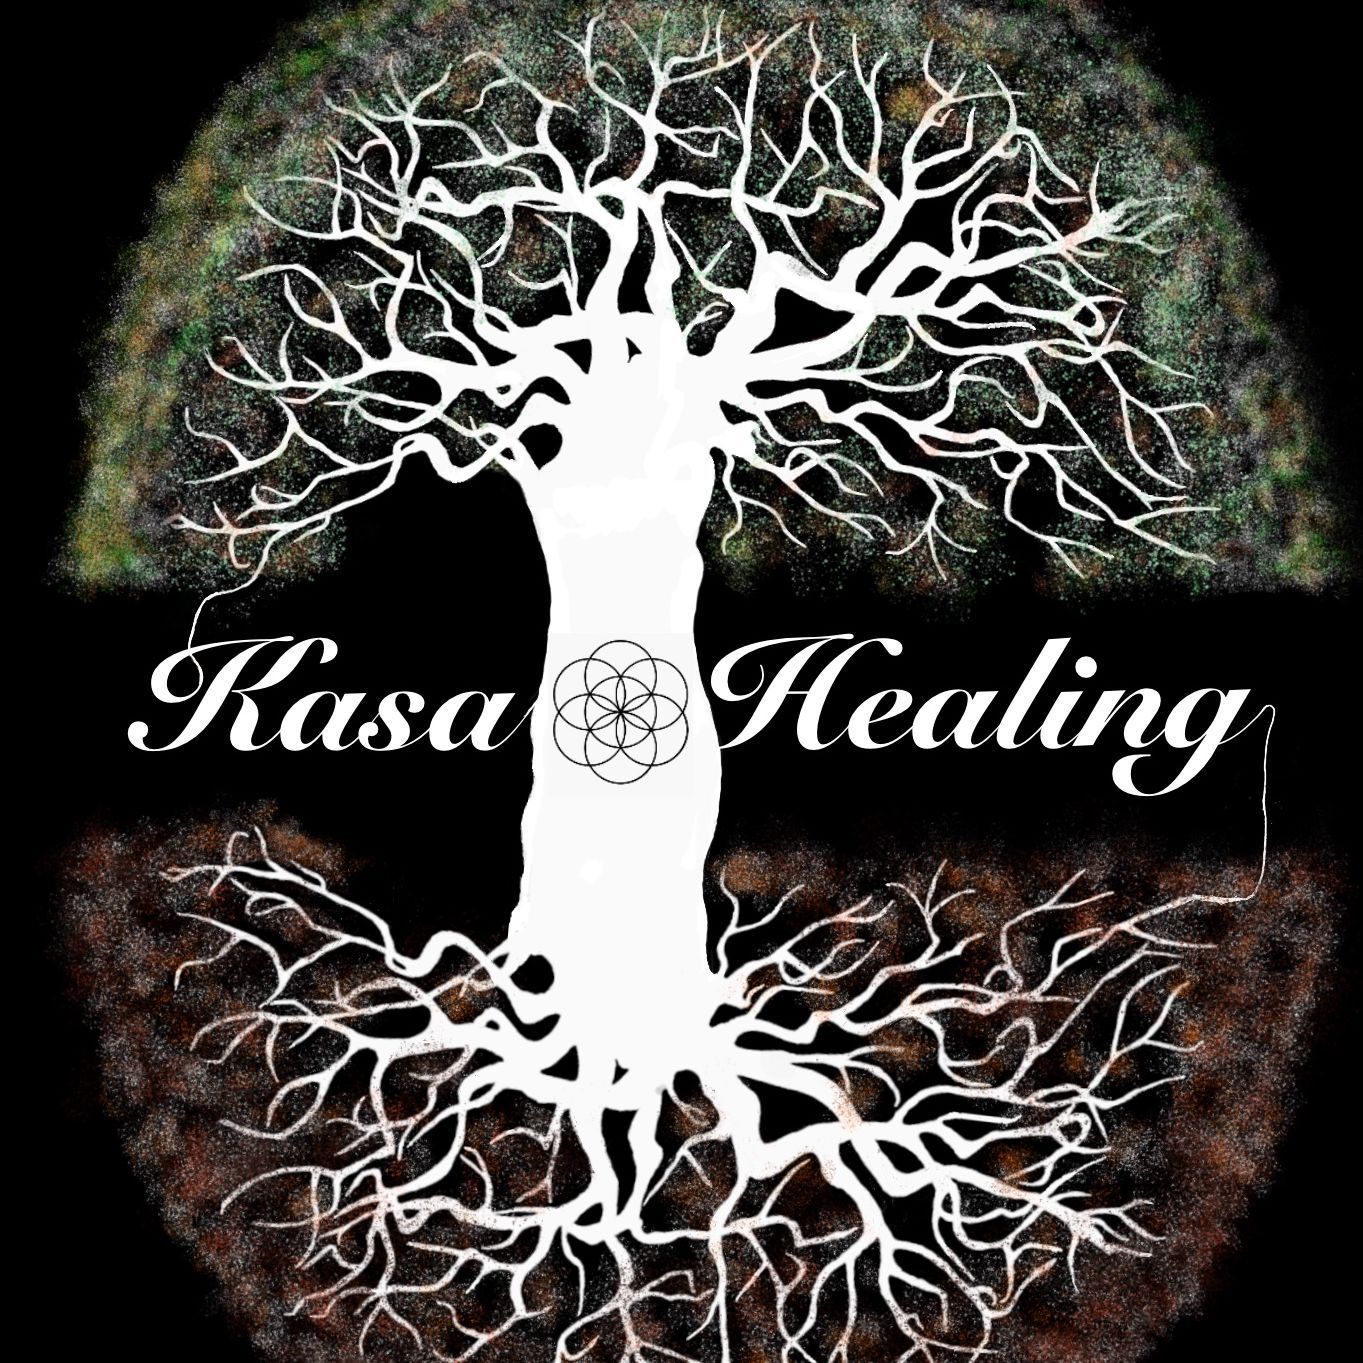 Kasa Healing, West 144th Street, New York, 10031